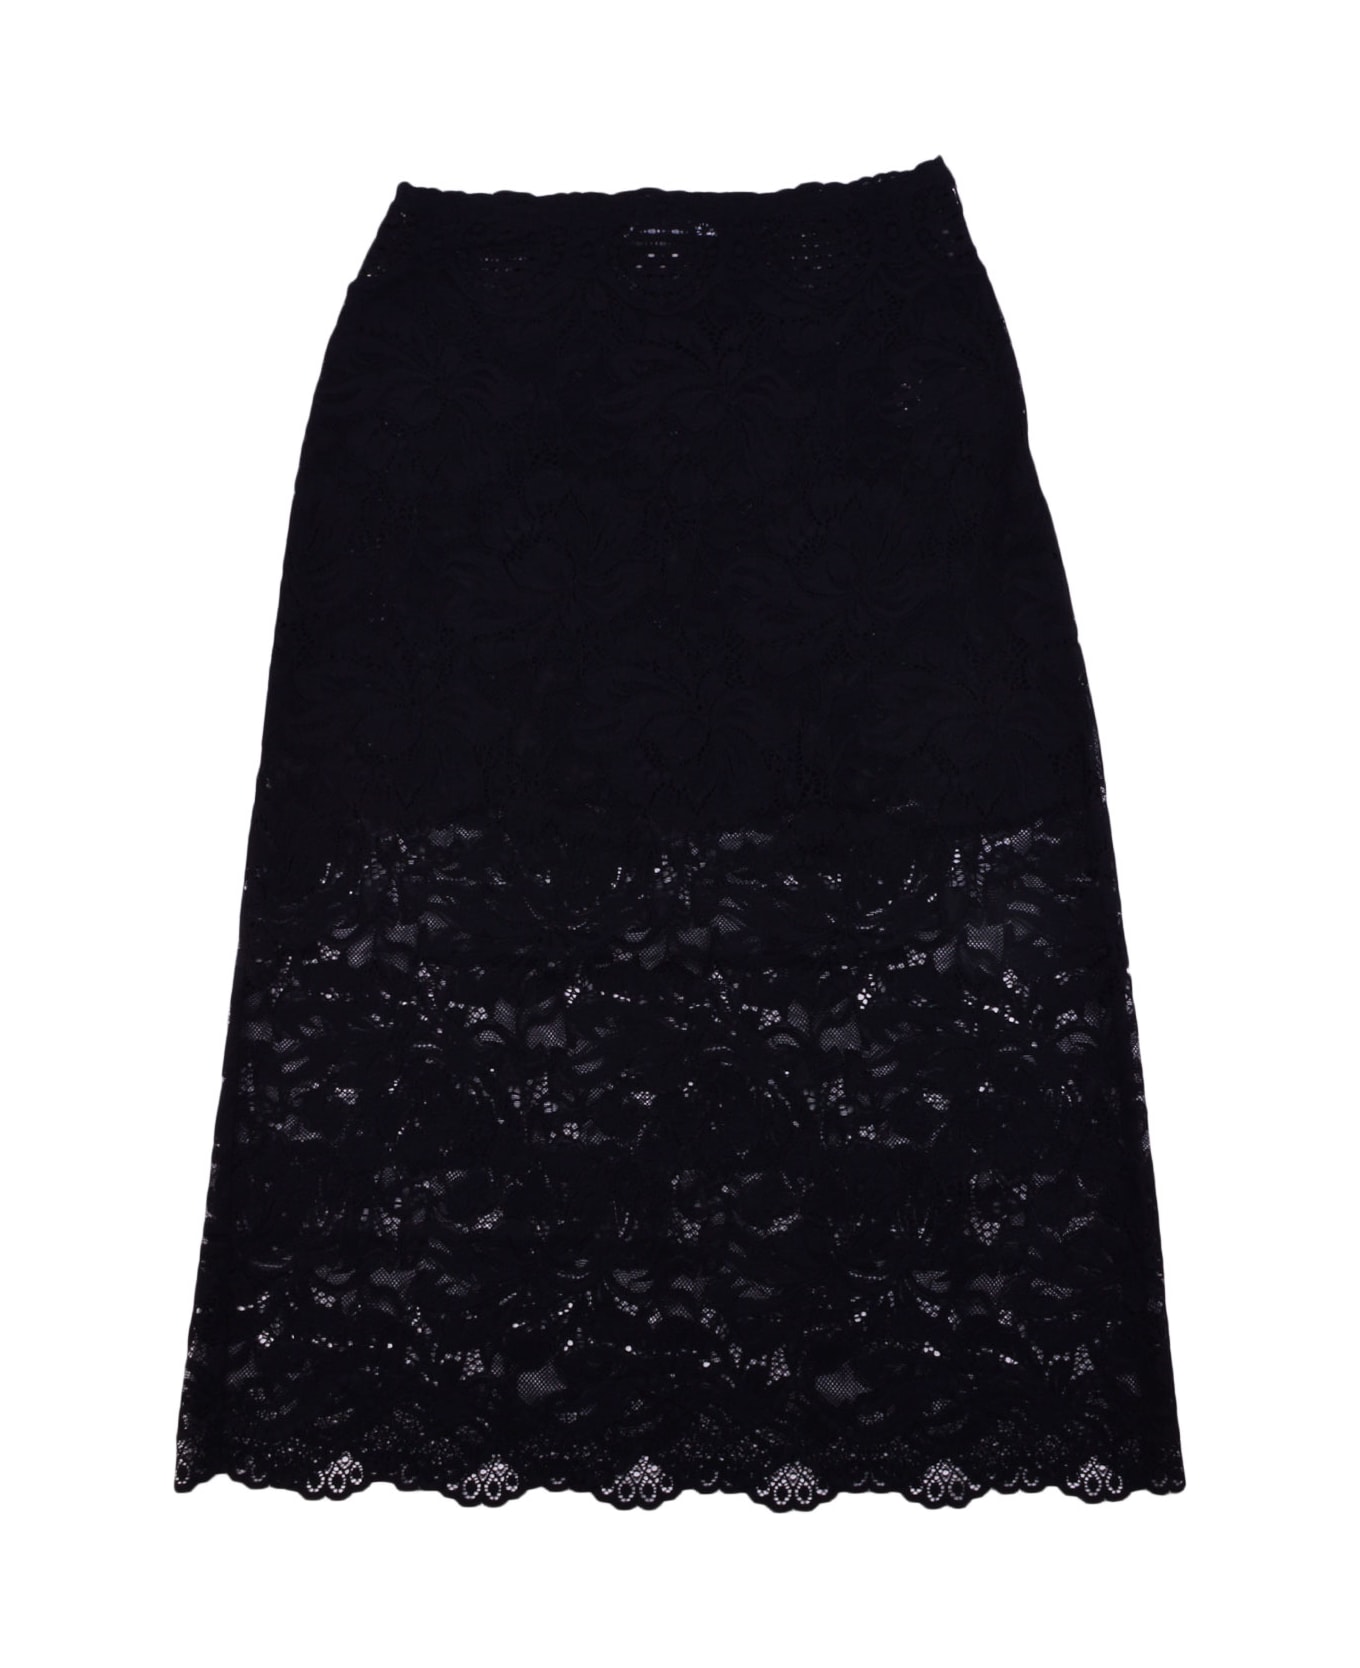 Paco Rabanne Lace Skirt - Black